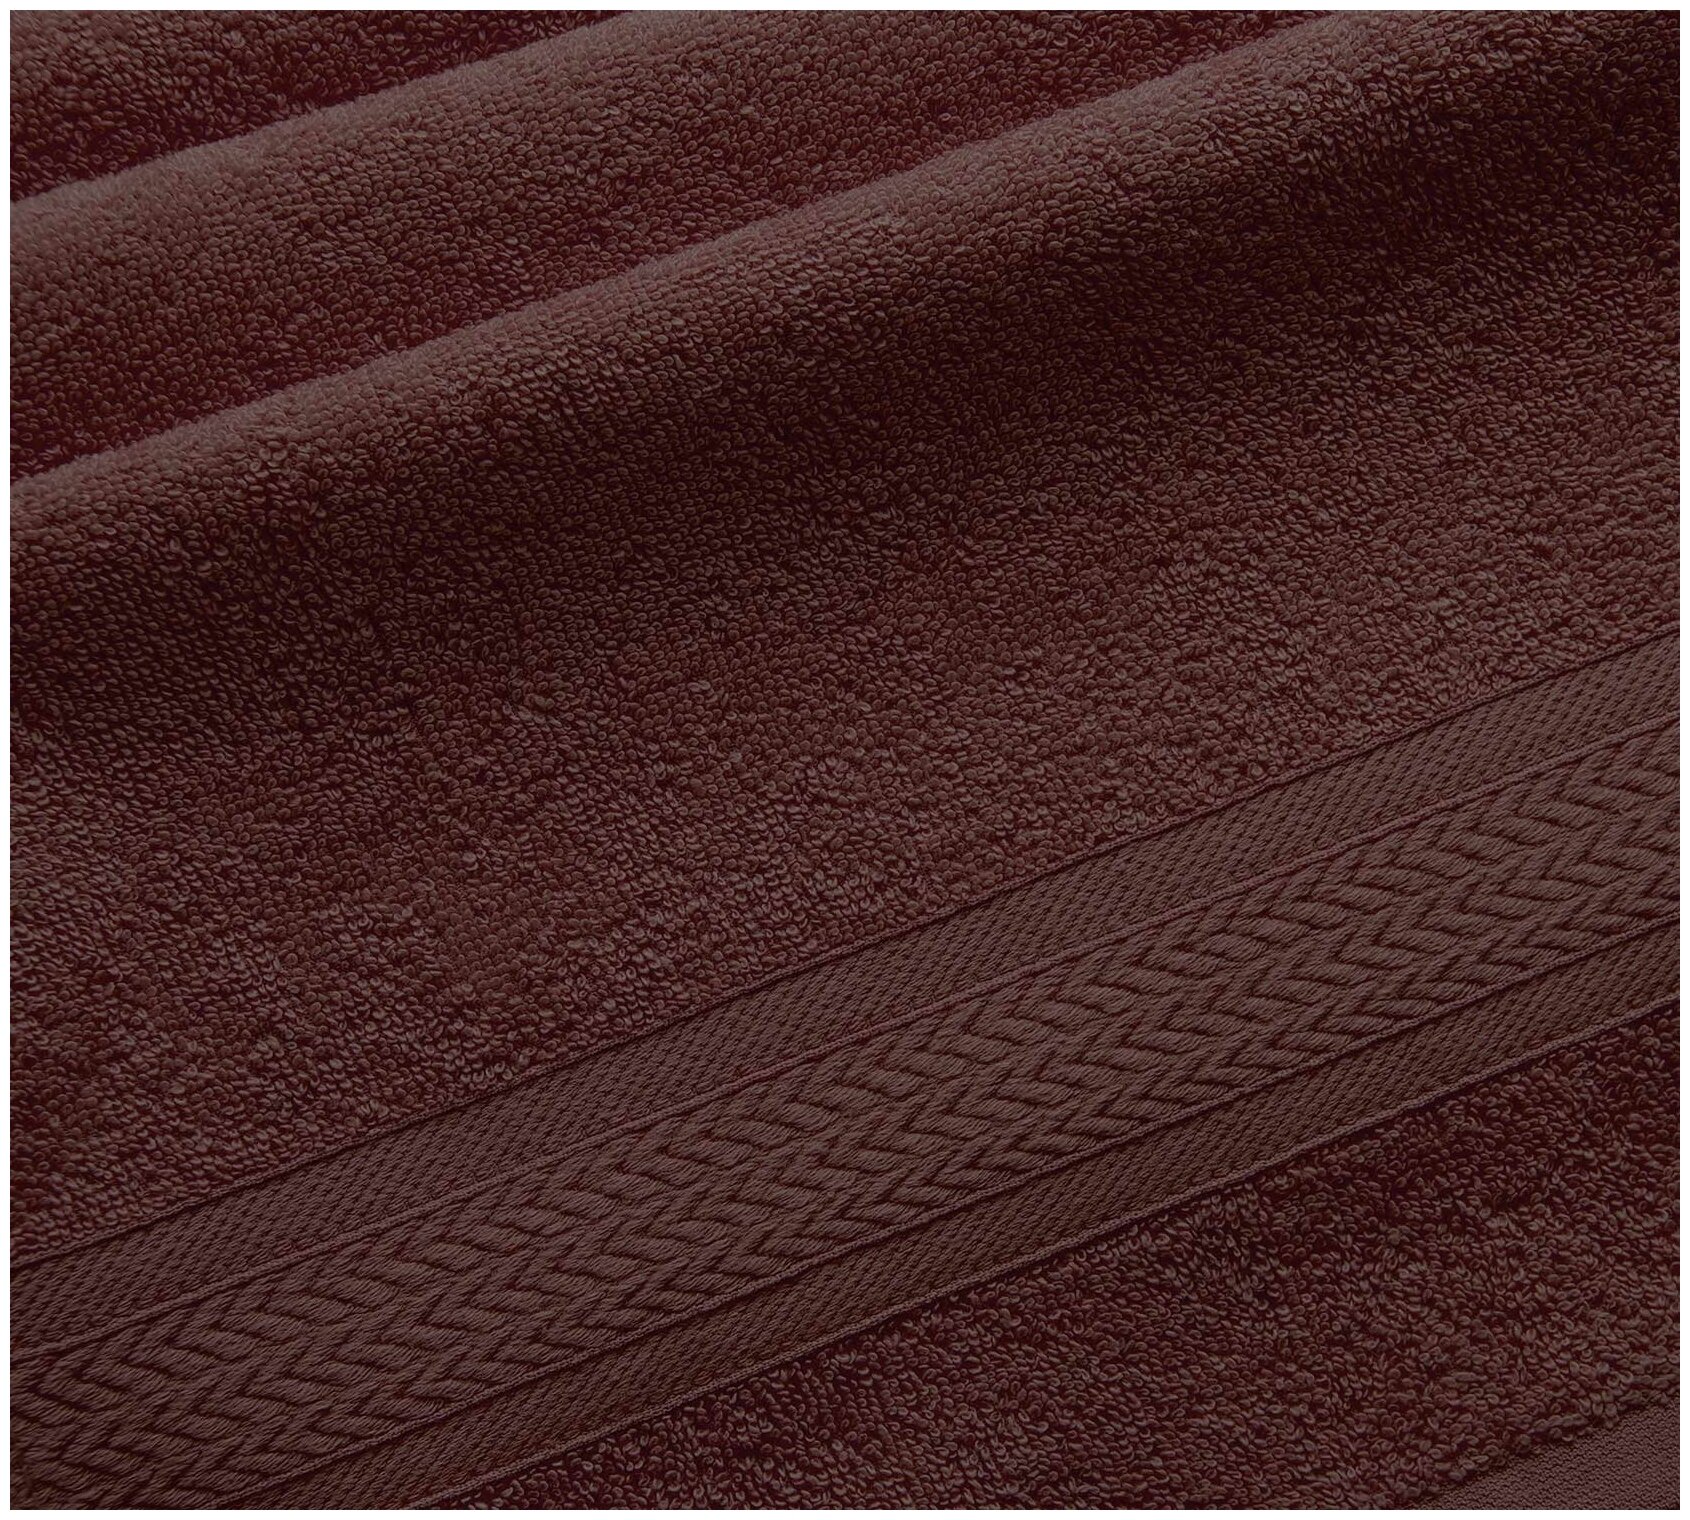 Текс-Дизайн Махровое полотенце Утро коричневый (50х90)